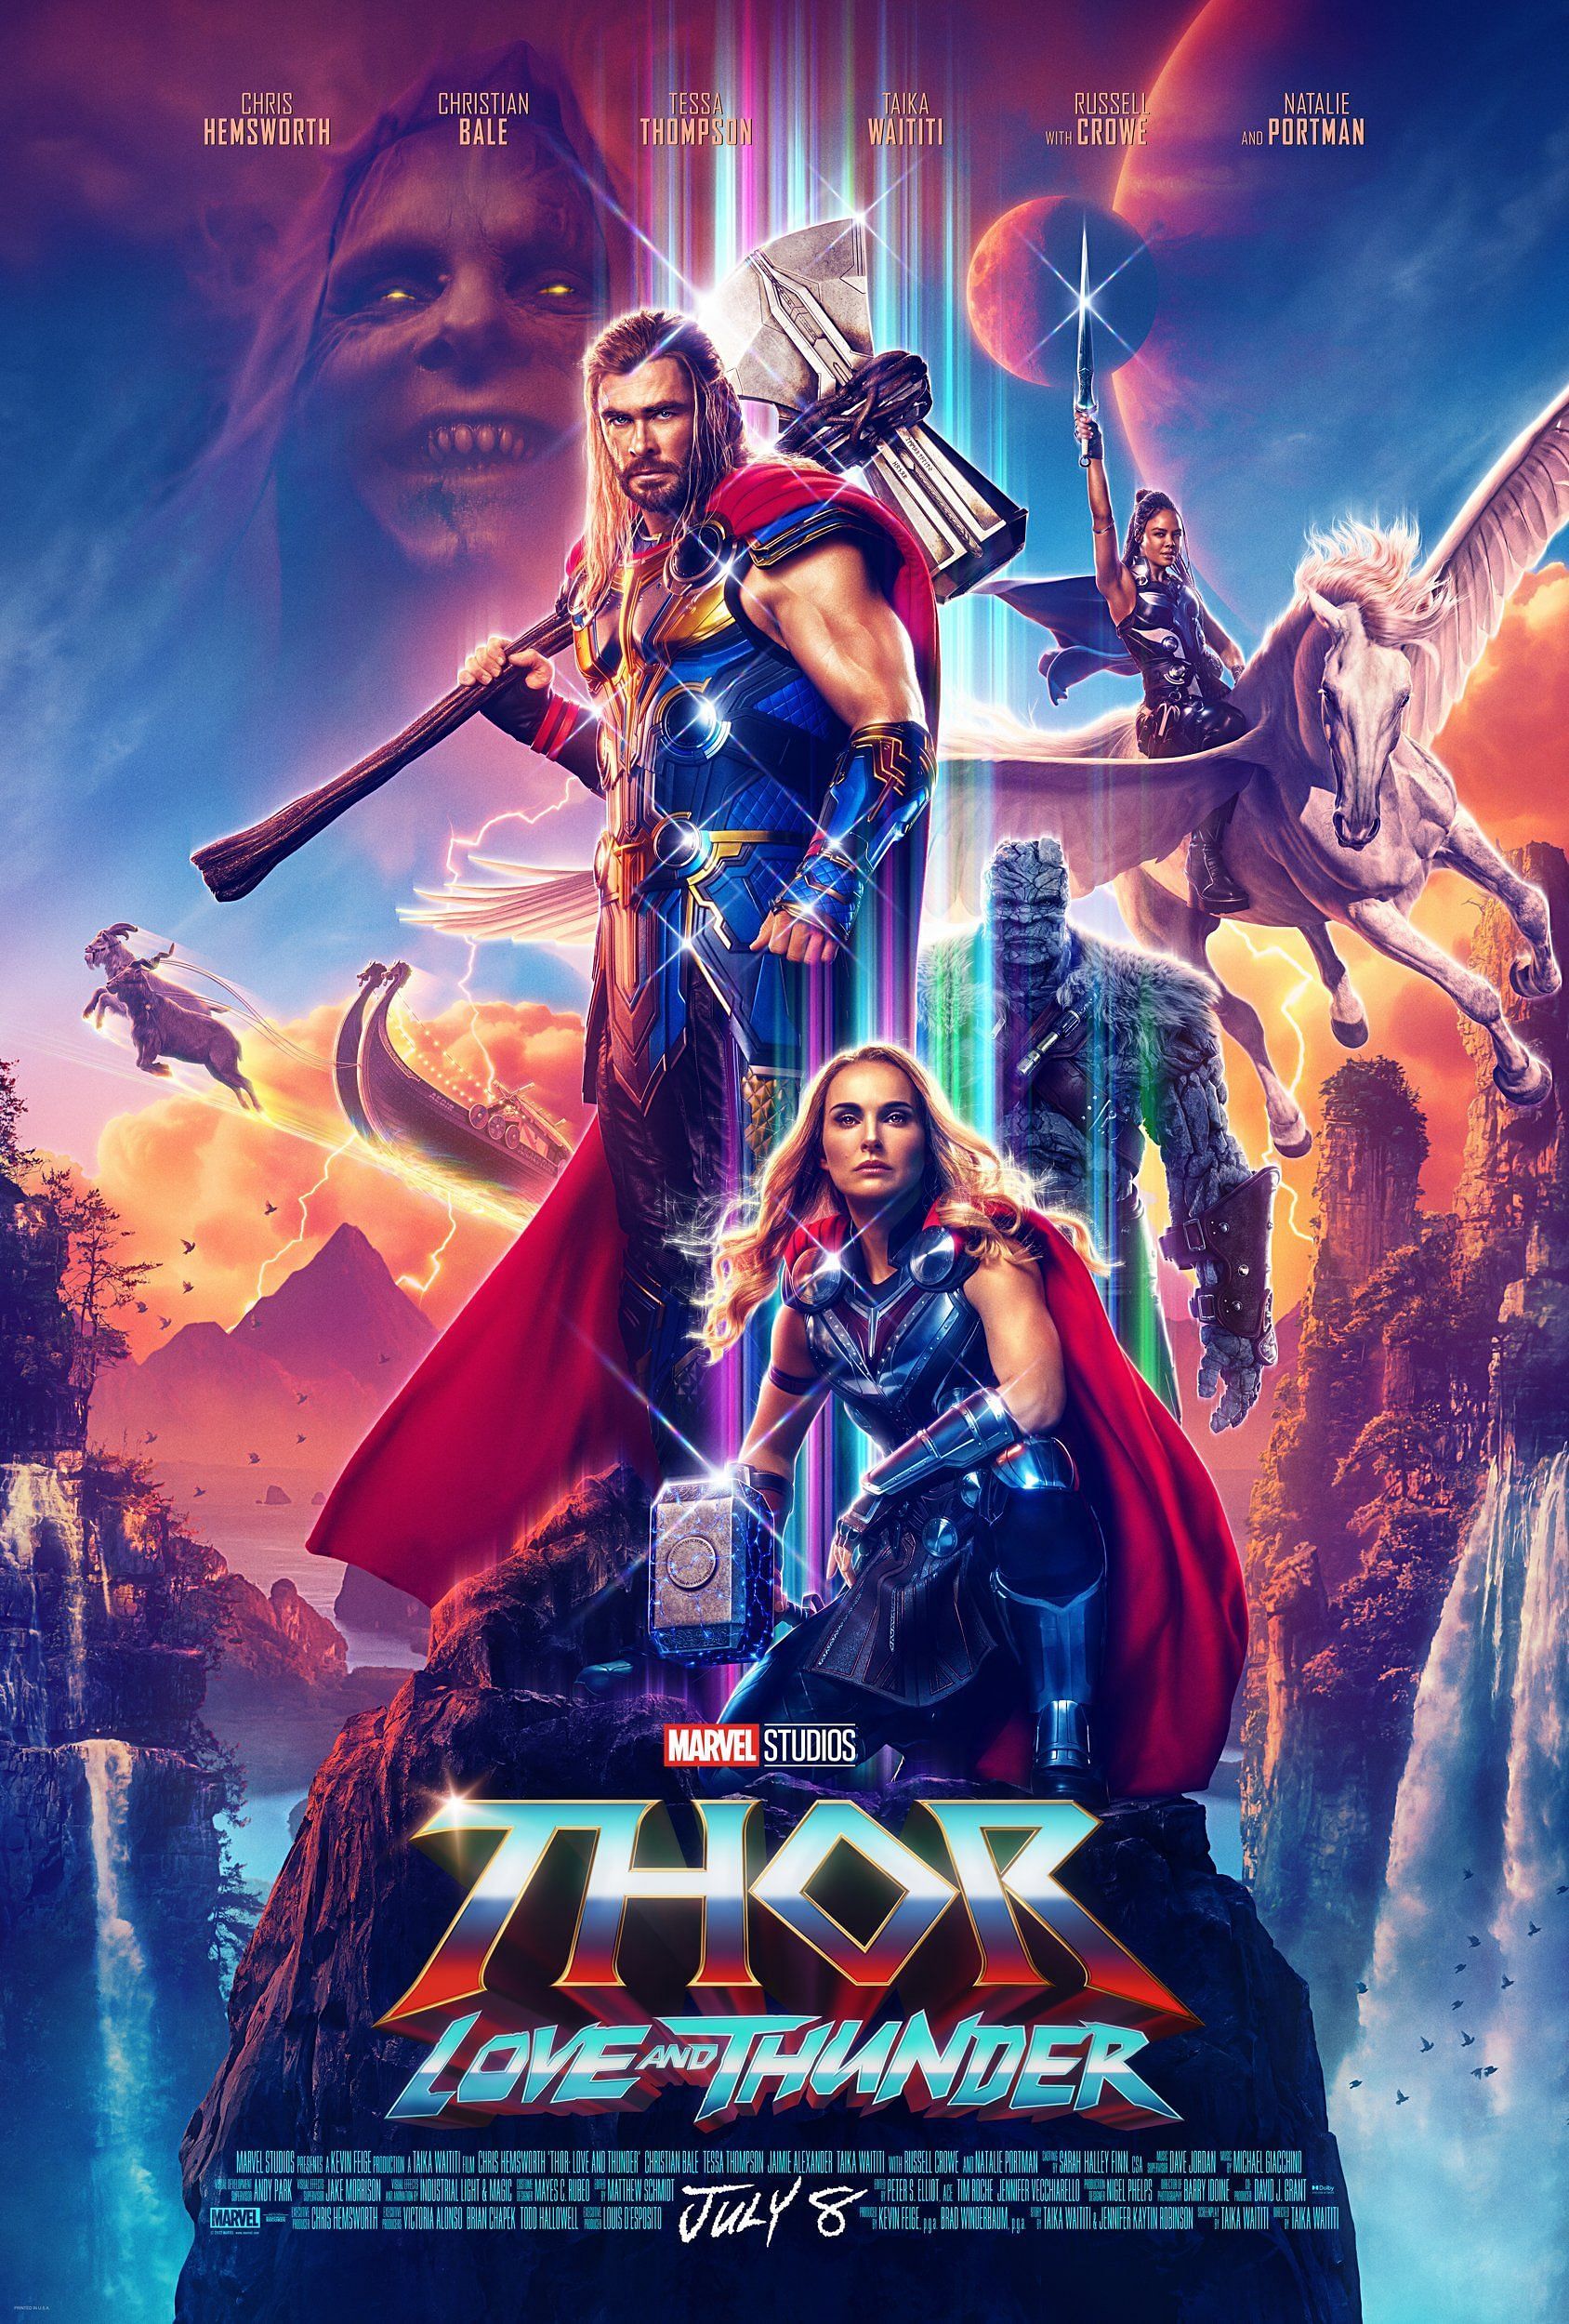 Thor: Love and Thunder (Image via Marvel)